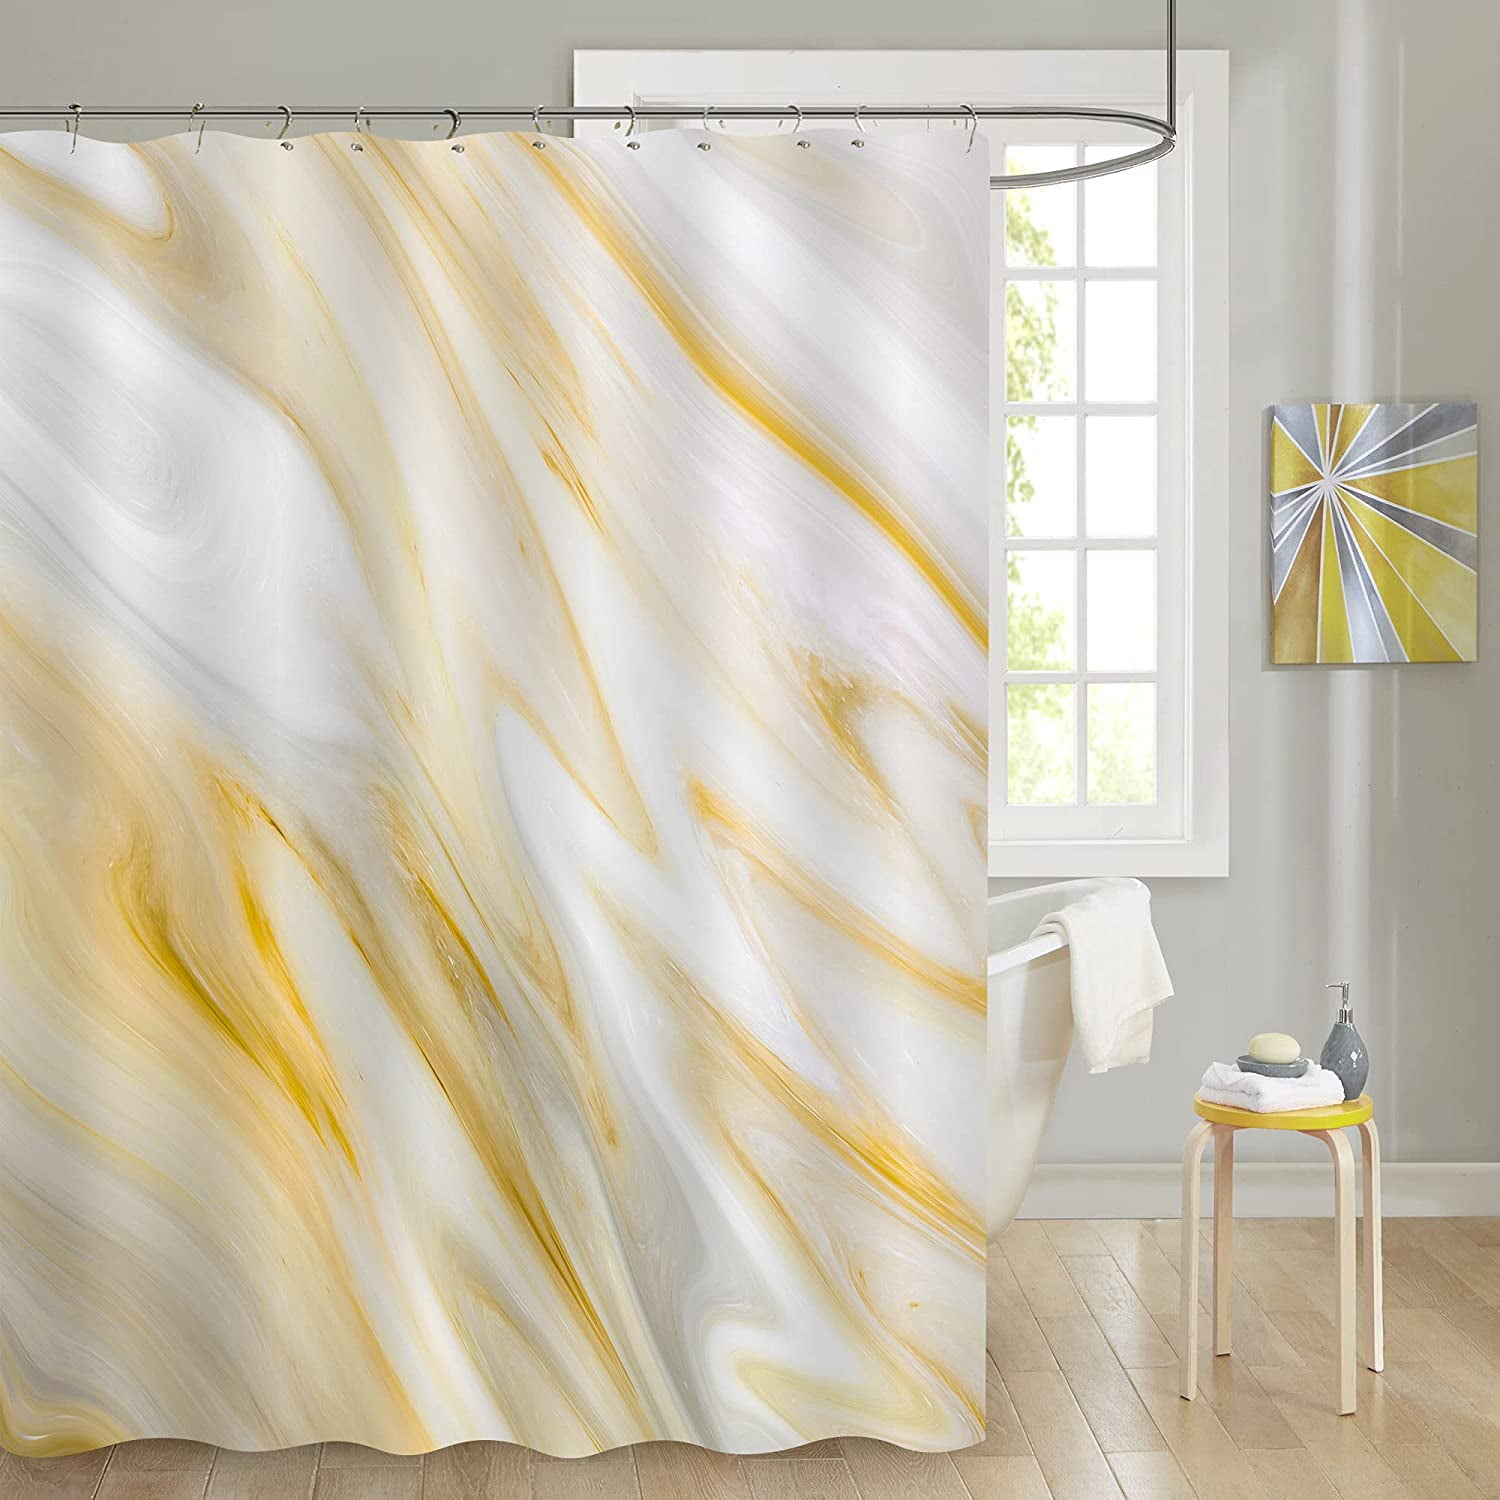 Yellow Umbrella 100% Polyester Fabric Shower Curtain Liner Bathroom Set Hooks 